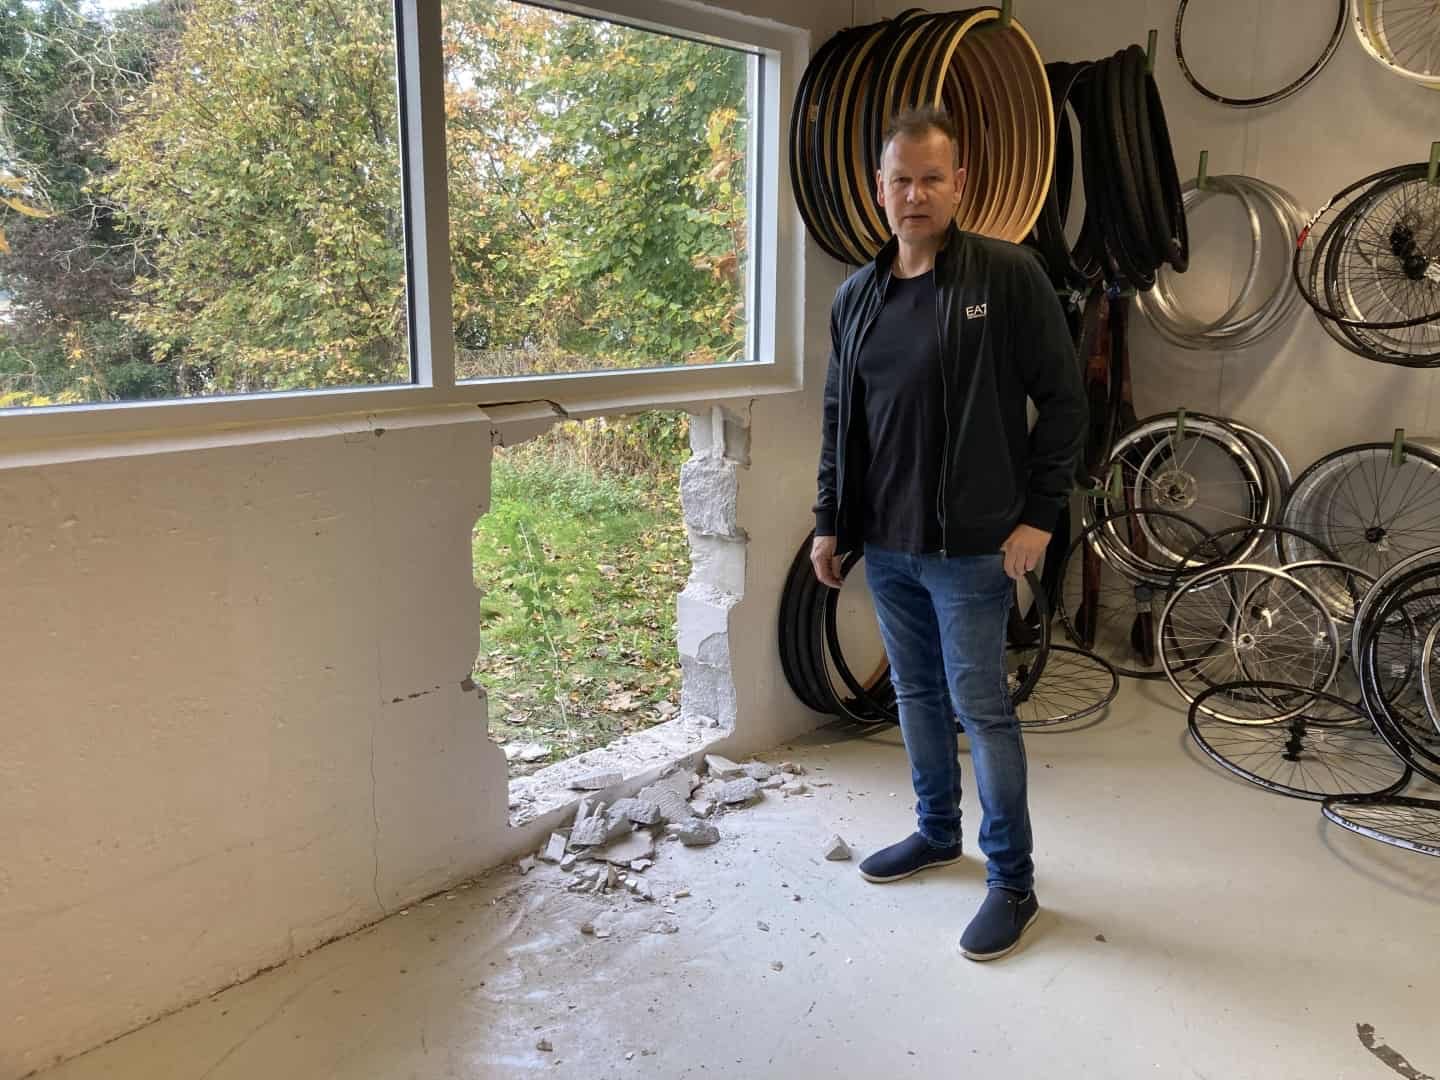 Reaktor Layouten Kloster Indbrudsramt cykelhandler: - Vil de have din cykel, skal de nok få den |  fyens.dk